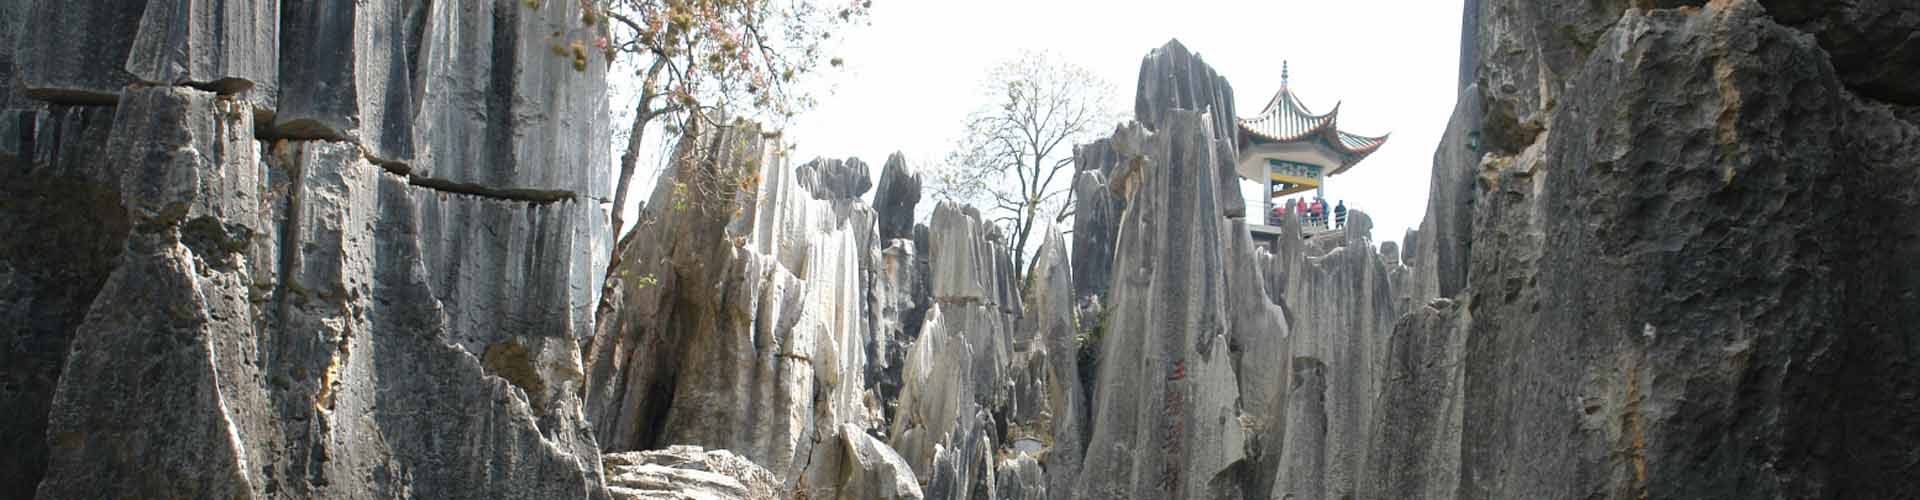 forêt de pierres de Kunming